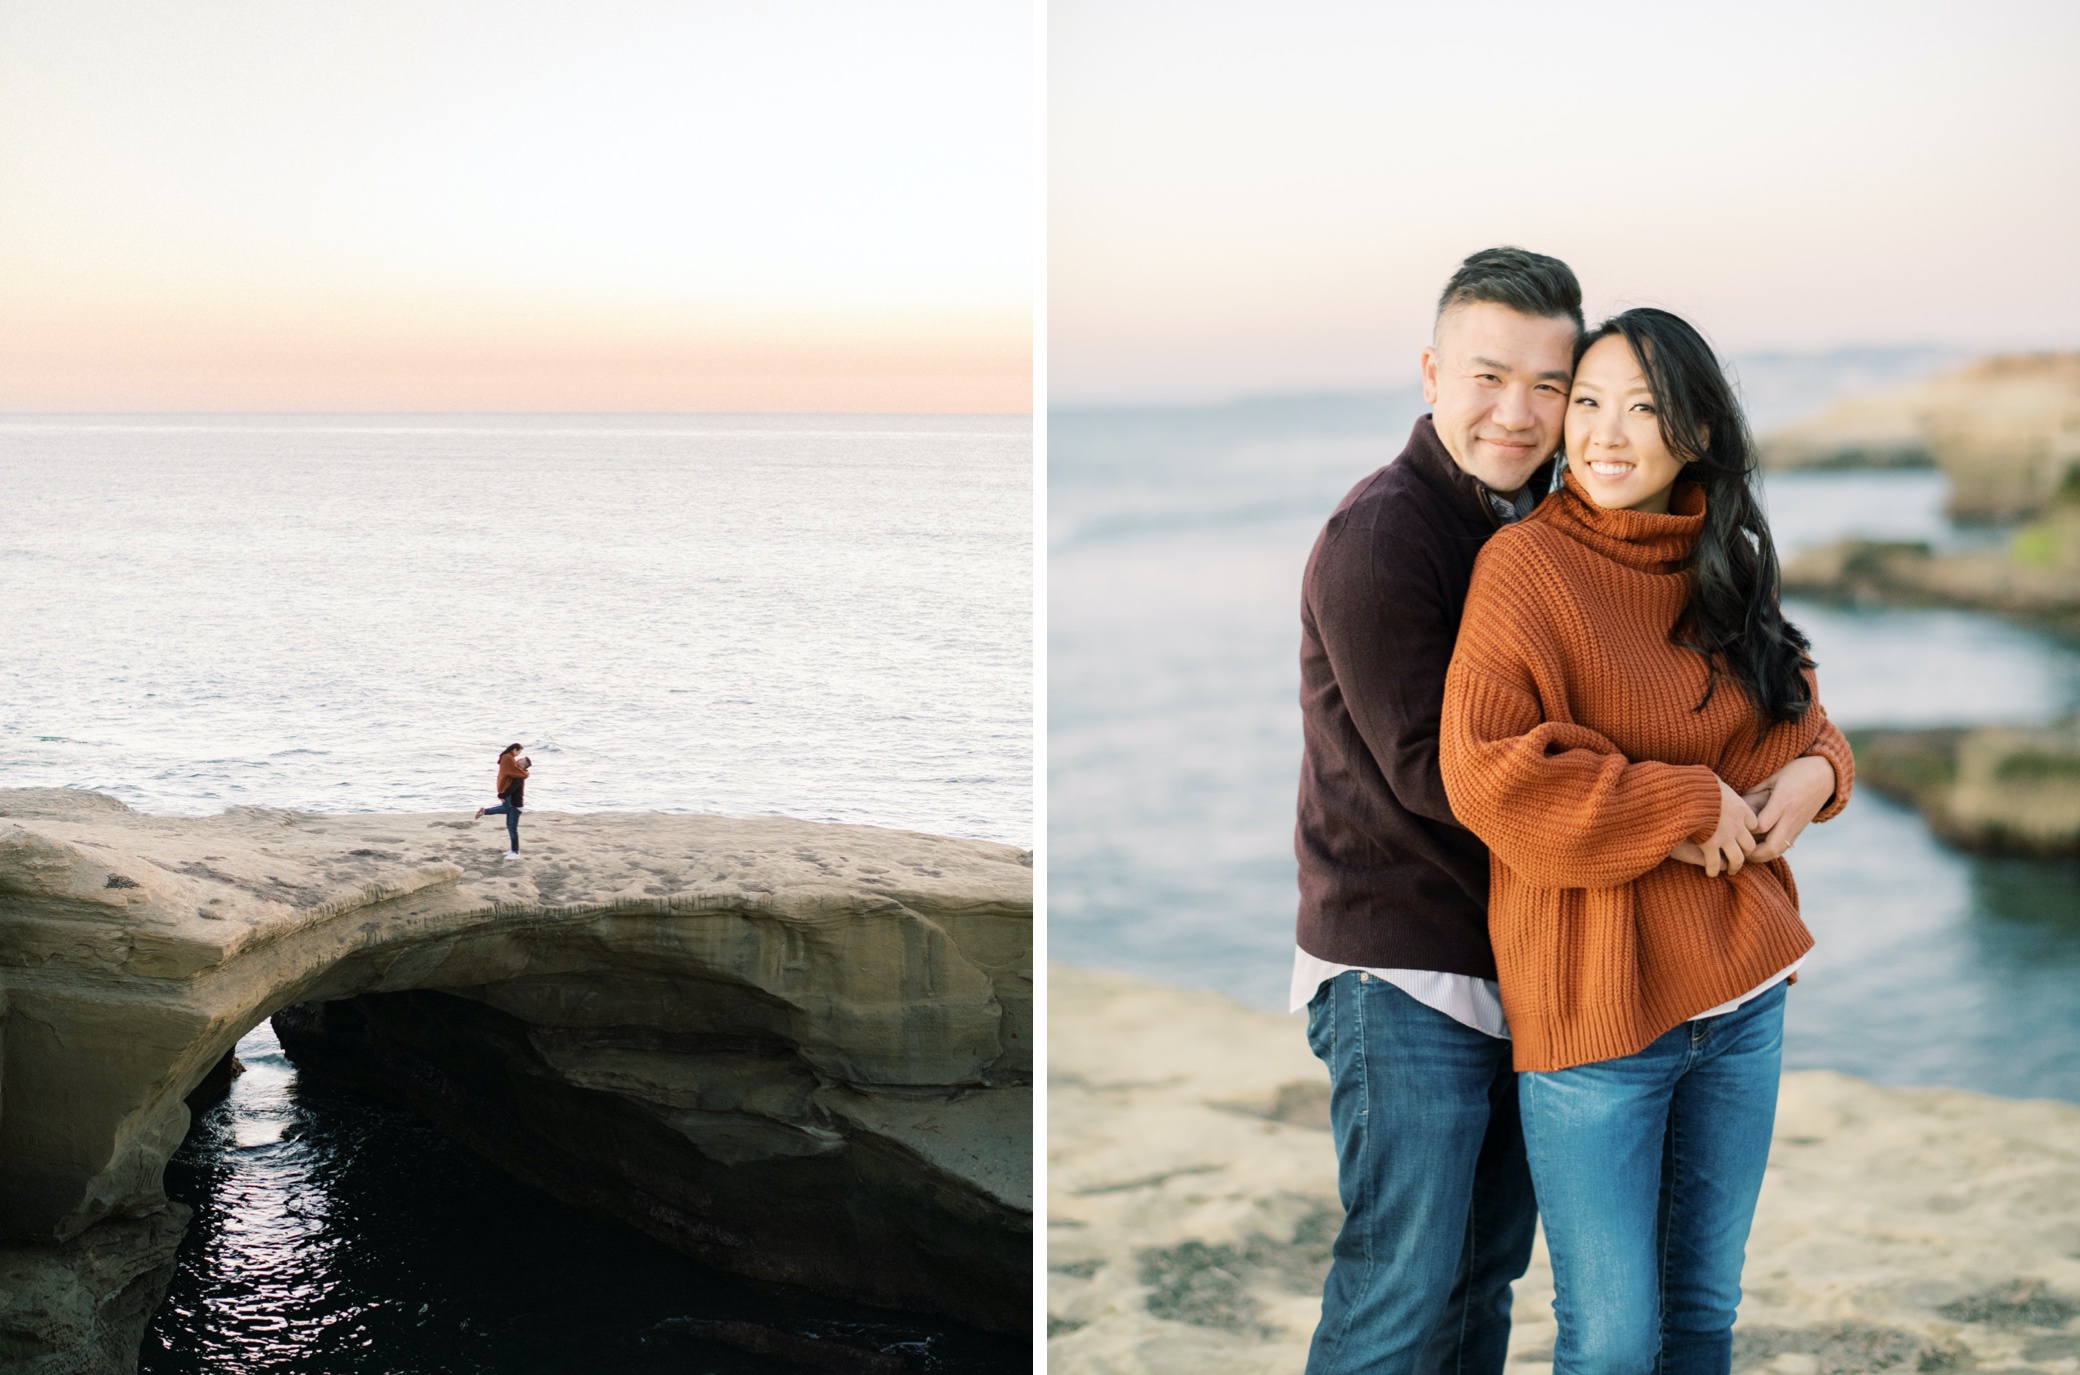 balboa park and sunset cliffs engagement photos